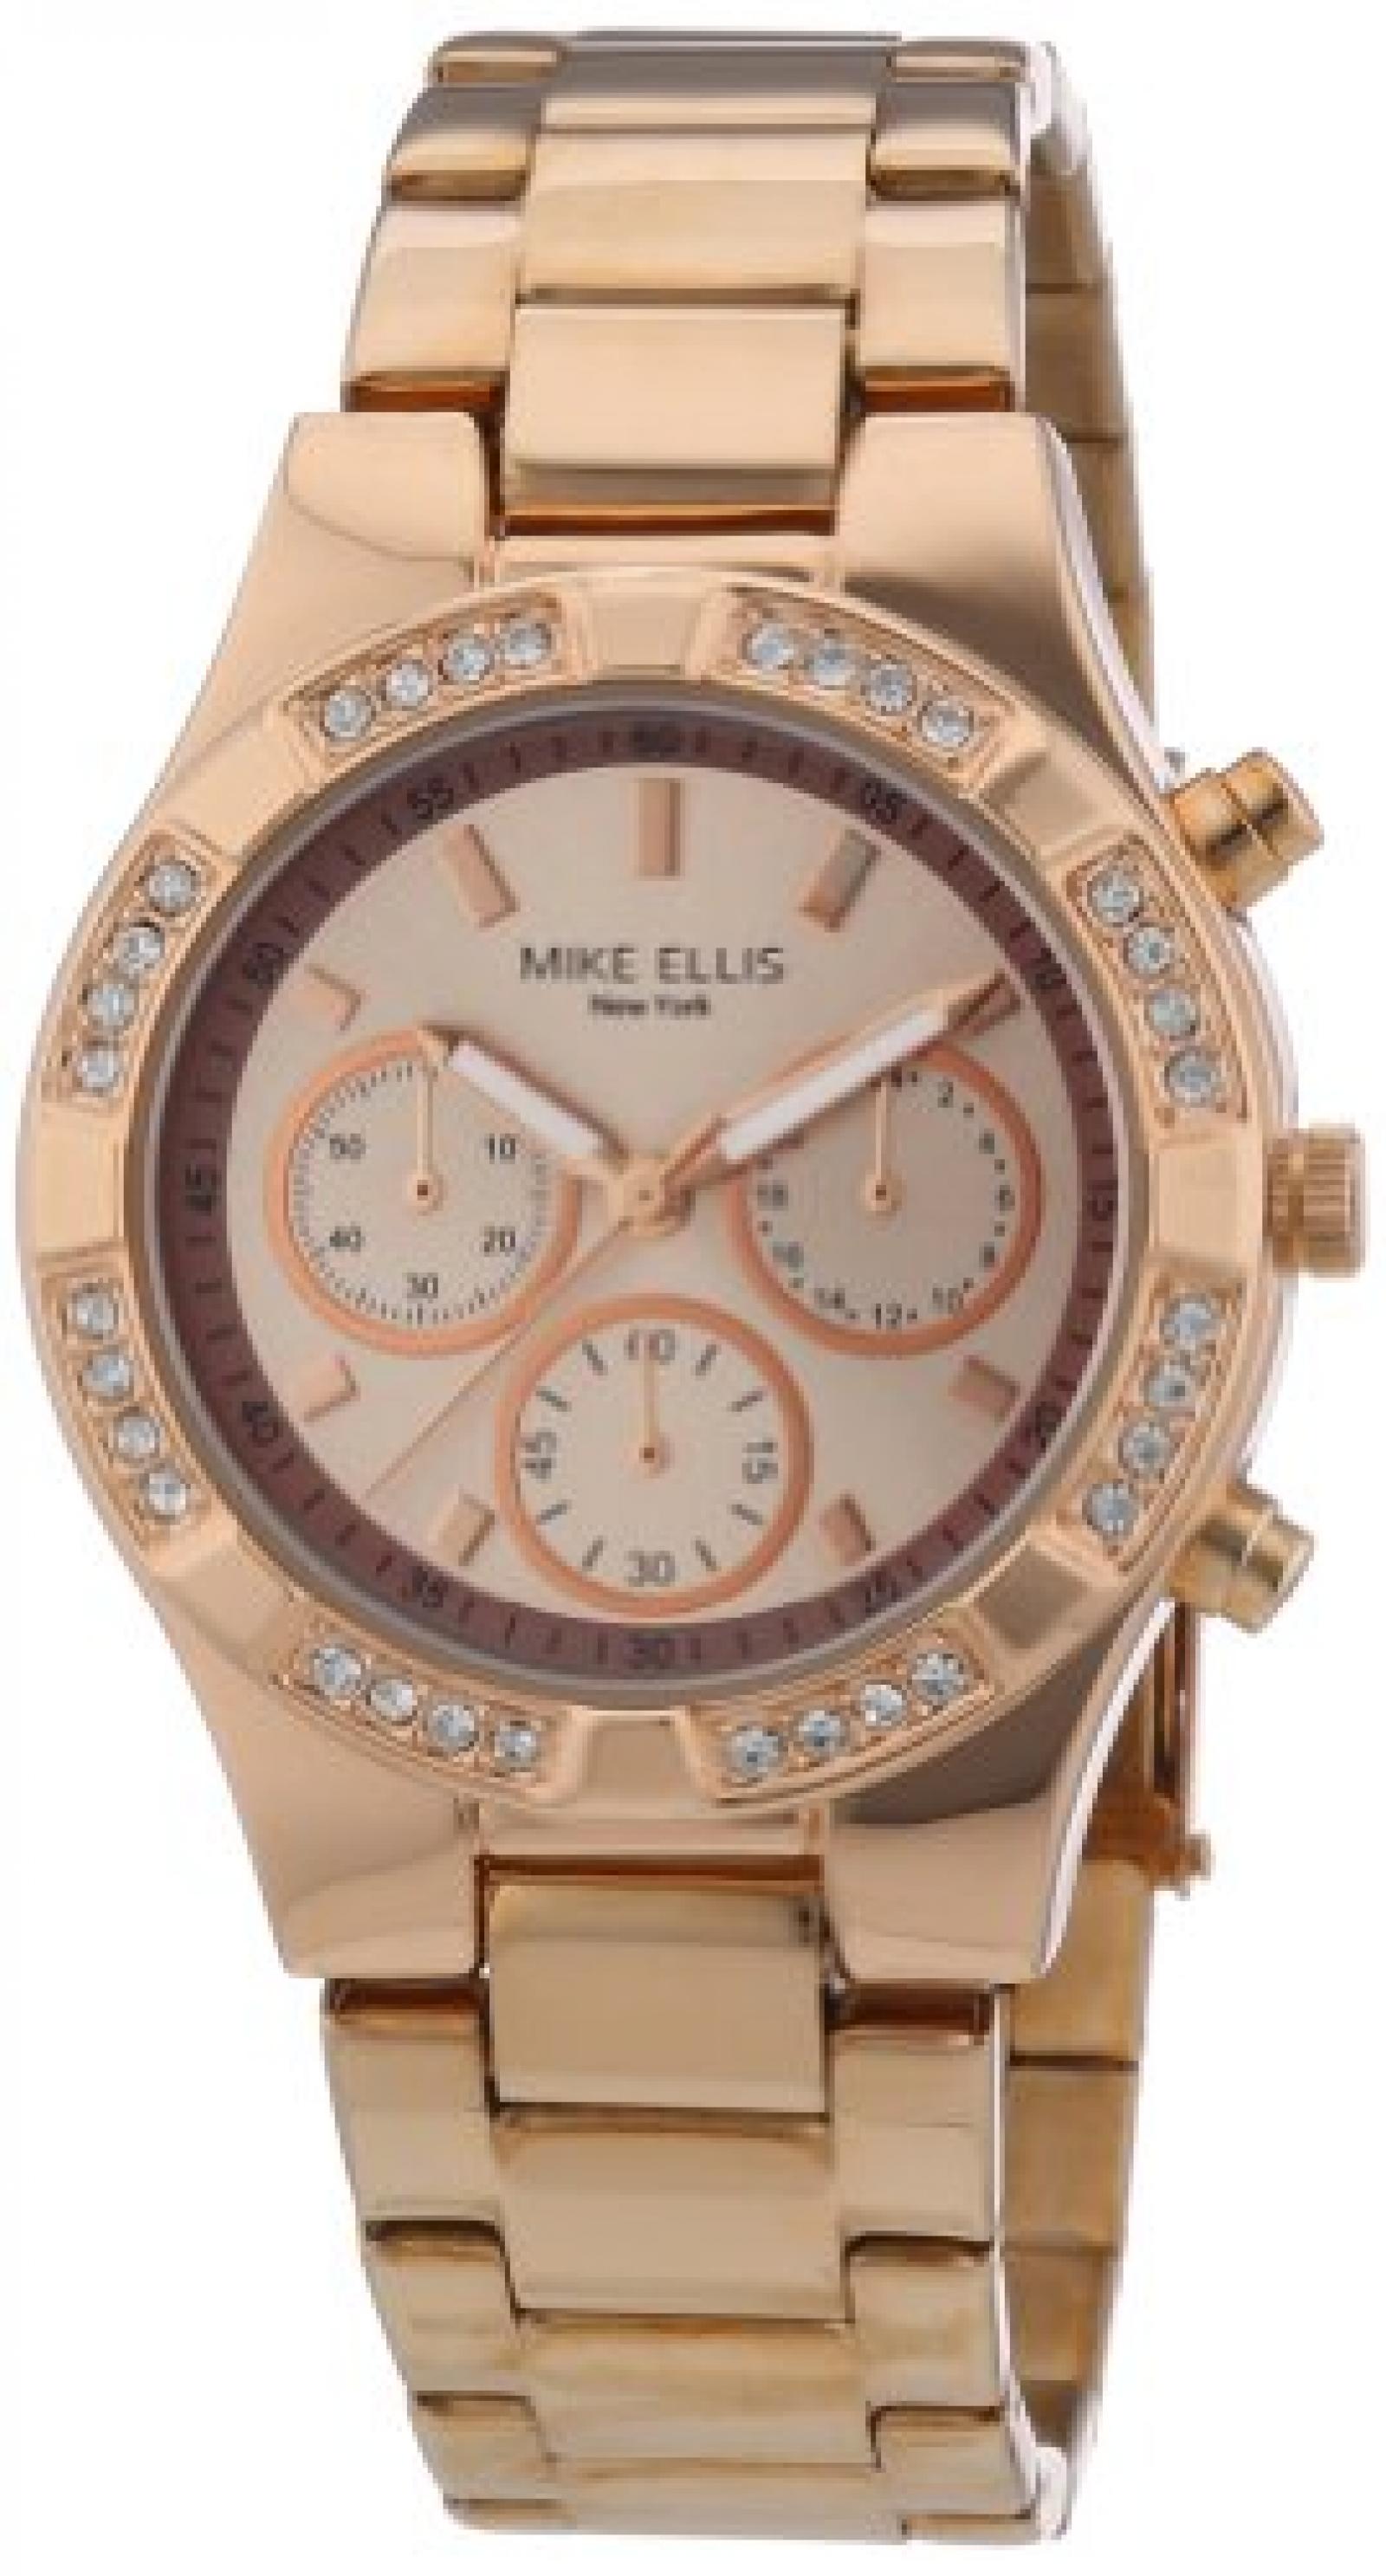 Mike Ellis New York Damen-Armbanduhr Analog Quarz Edelstahl beschichtet L2698ARM 